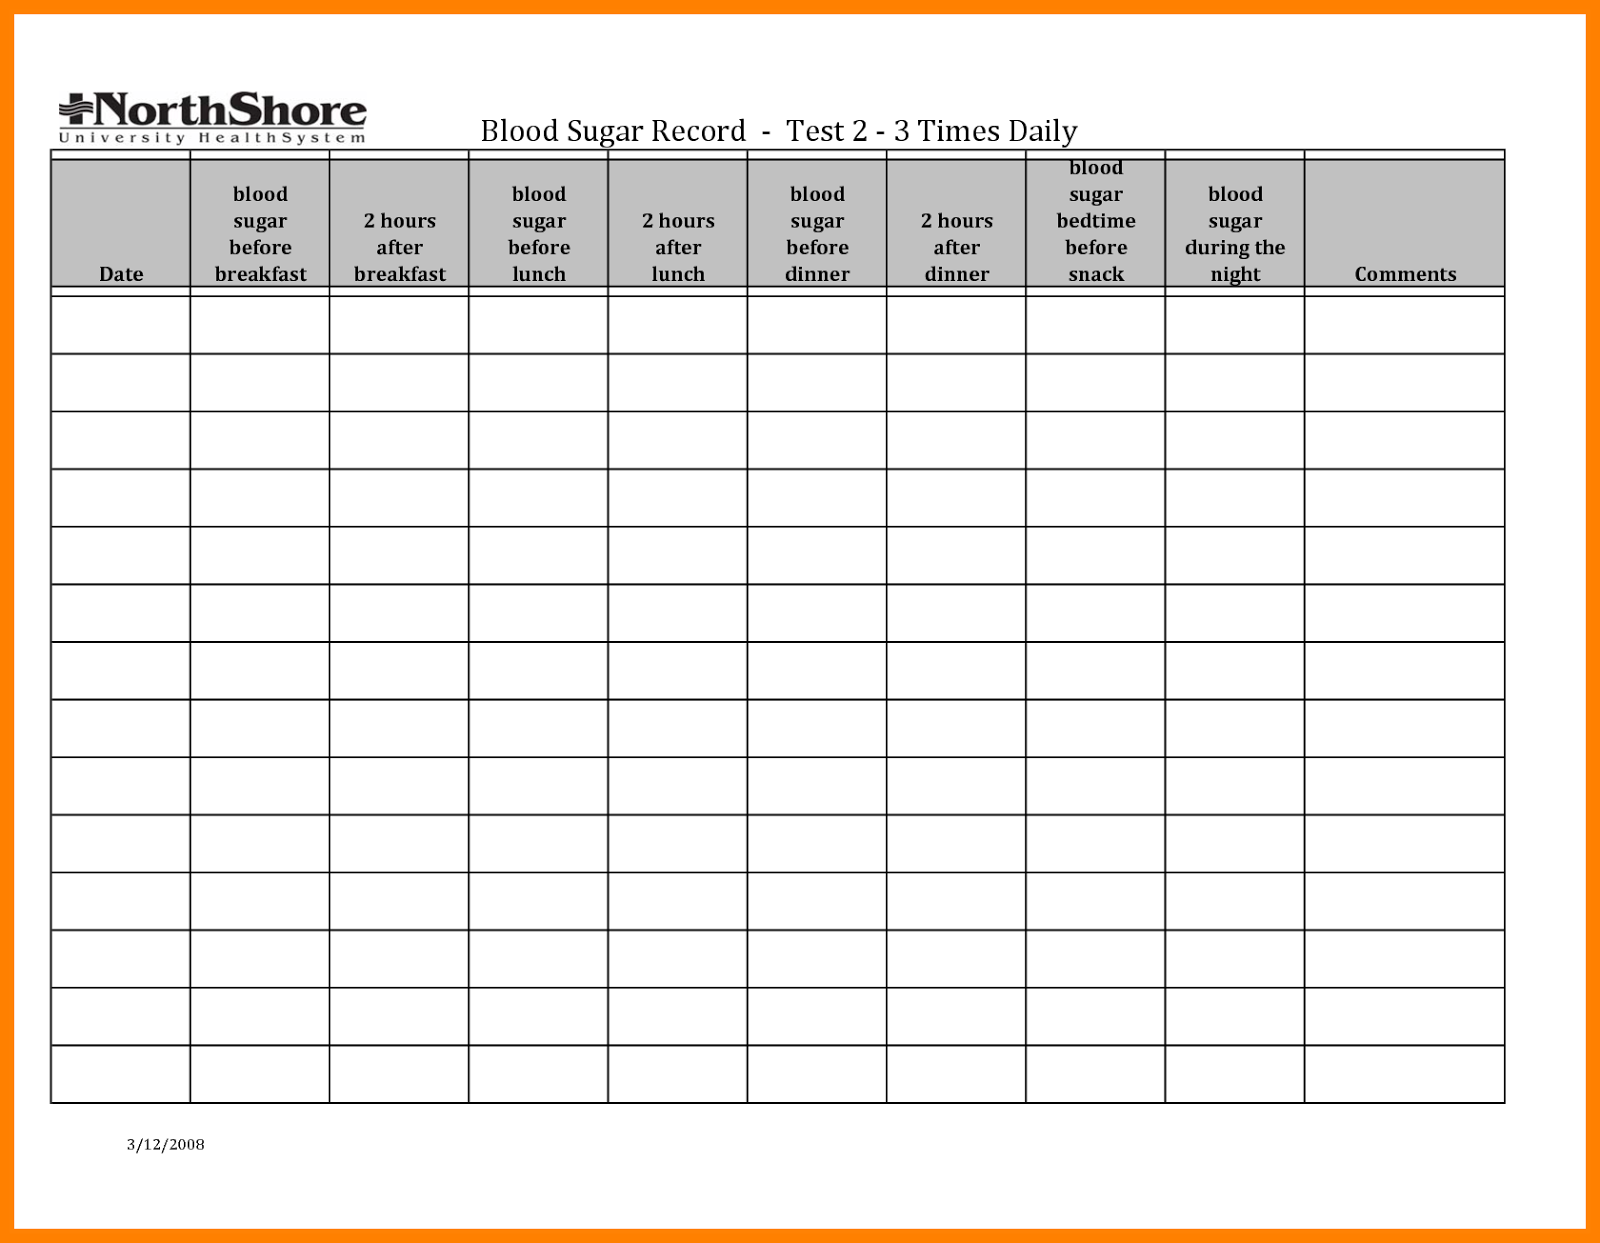 Blood sugar log template In PDF Format